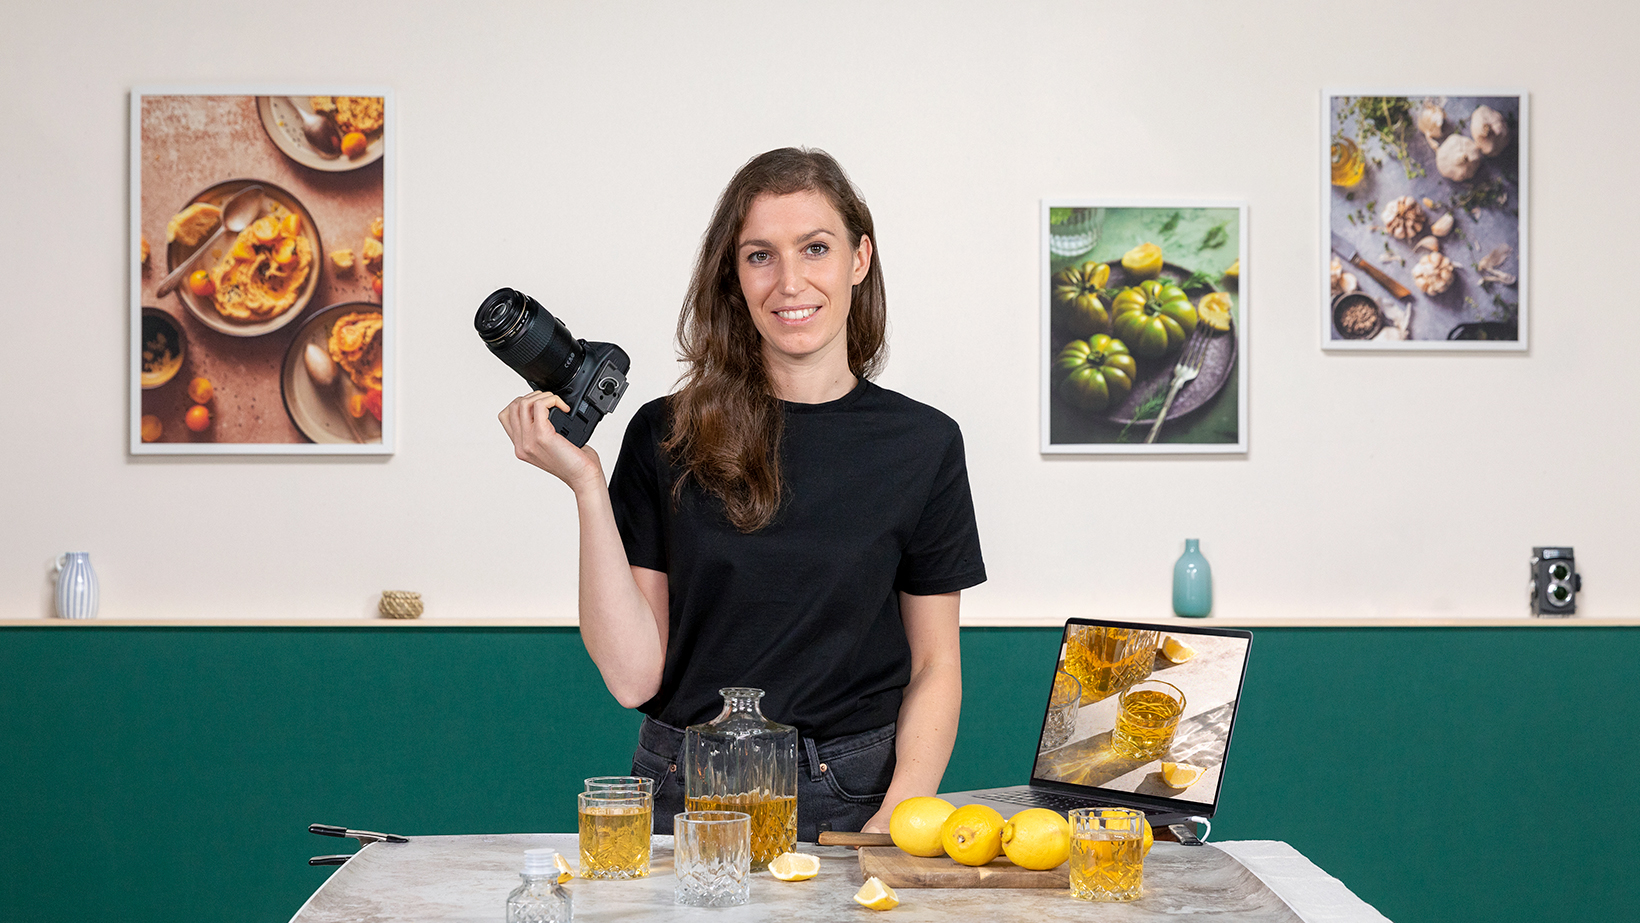 Professional Food Photography: Take Dynamic Shots